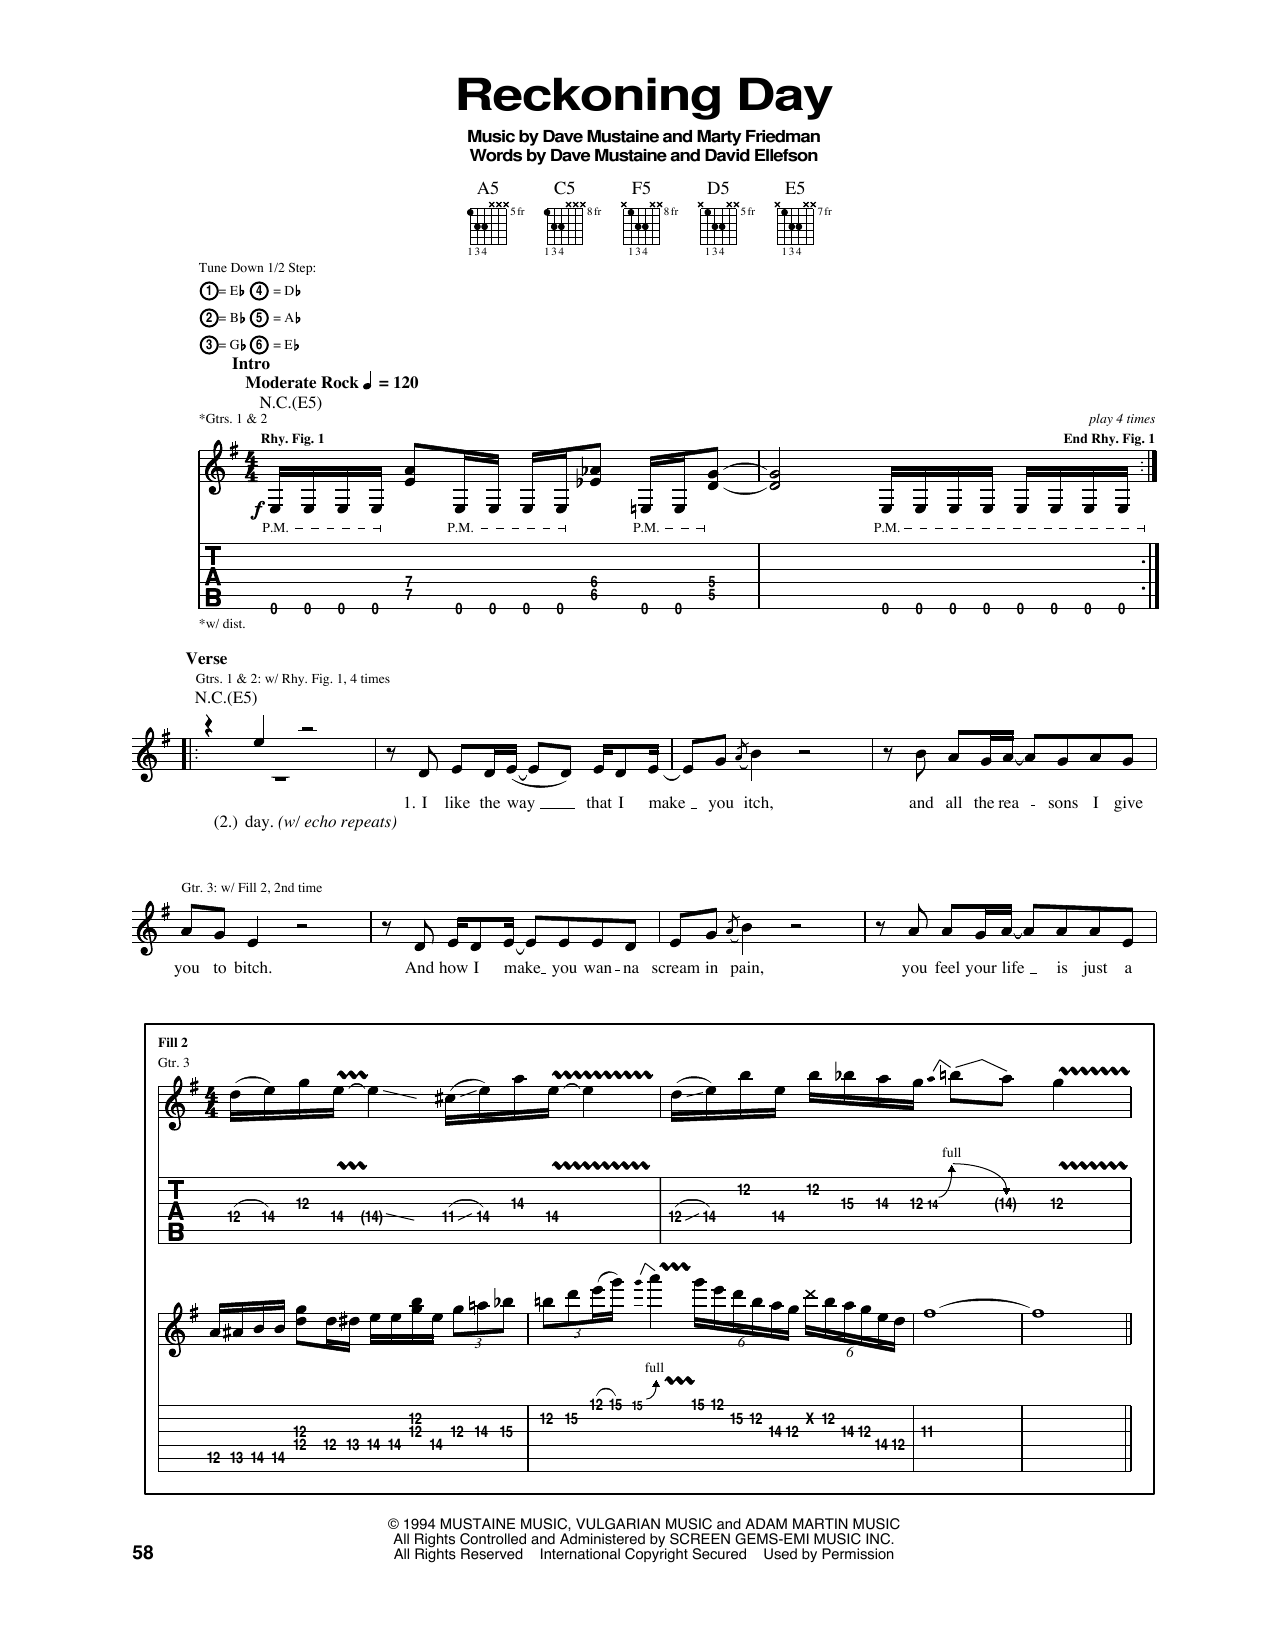 Megadeth Reckoning Day Sheet Music Notes & Chords for Guitar Tab - Download or Print PDF